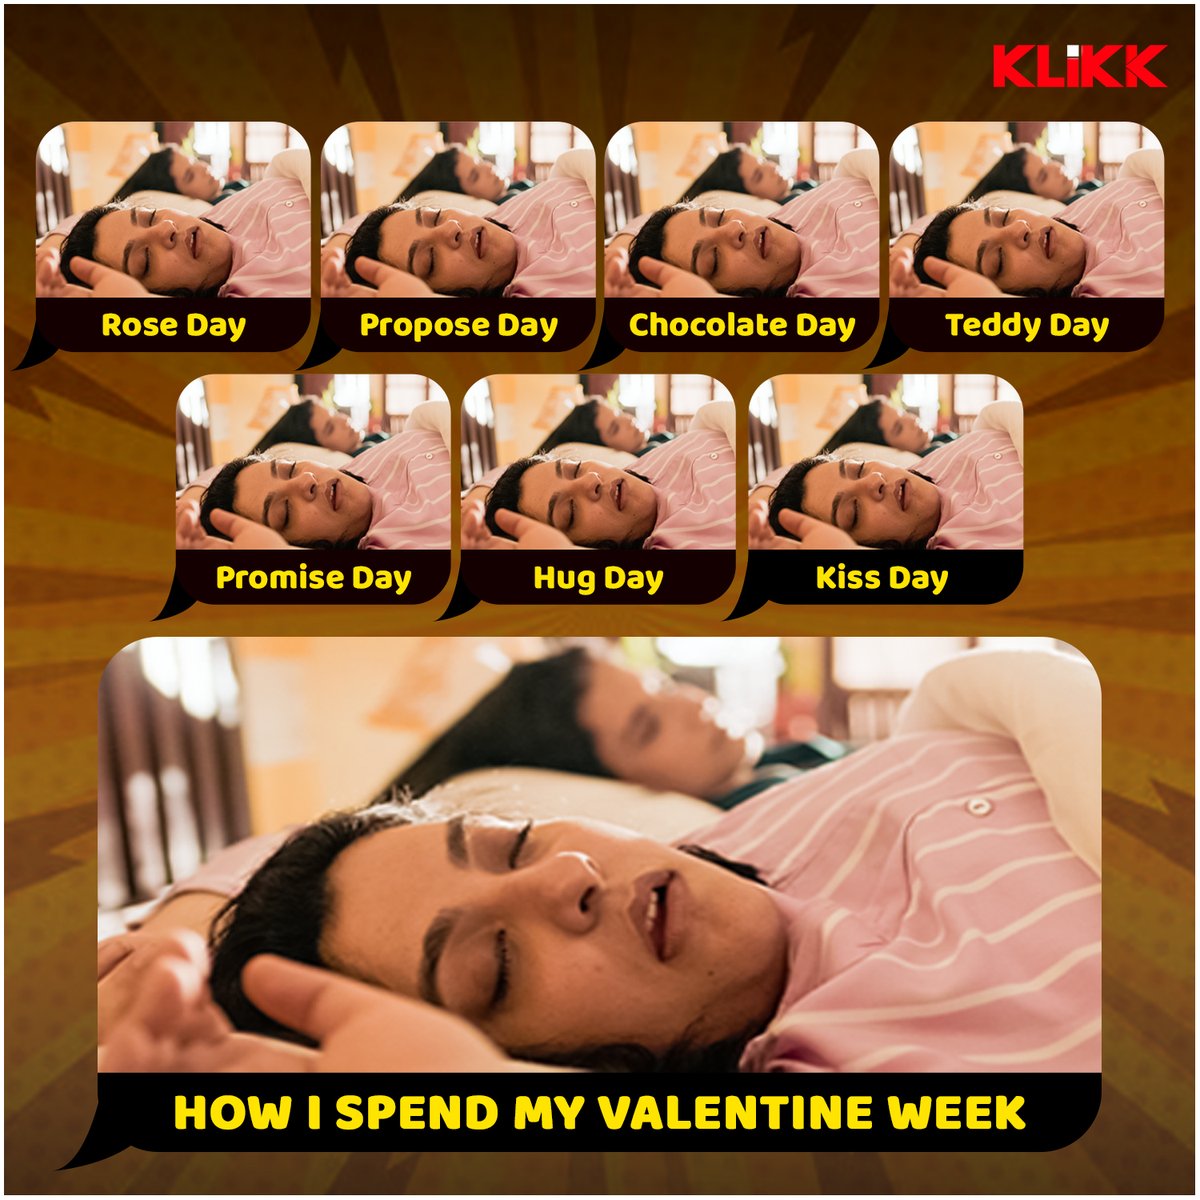 How I Spend My Valentine Week 😴😂😴
#Klikk #sleepy #singlelifebelike #funny #valentineweek